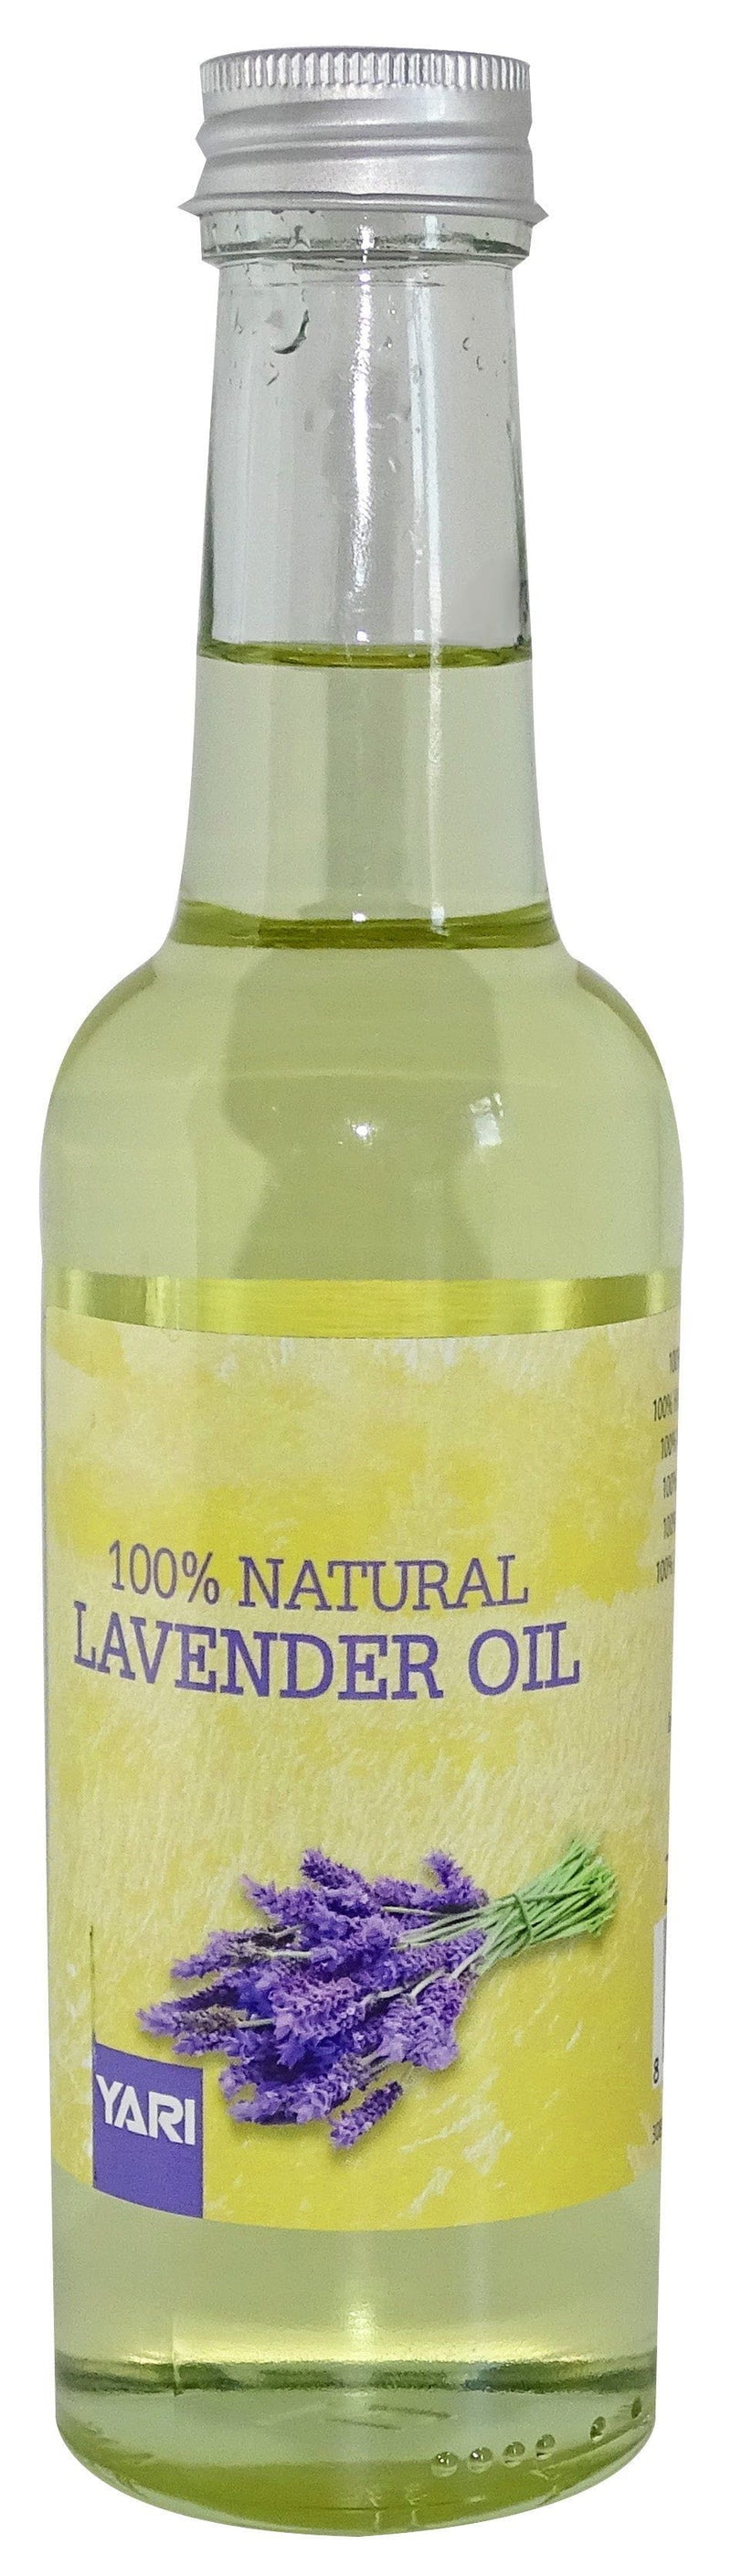 Yari 100% Natural Lavender Oil 250ml | gtworld.be 